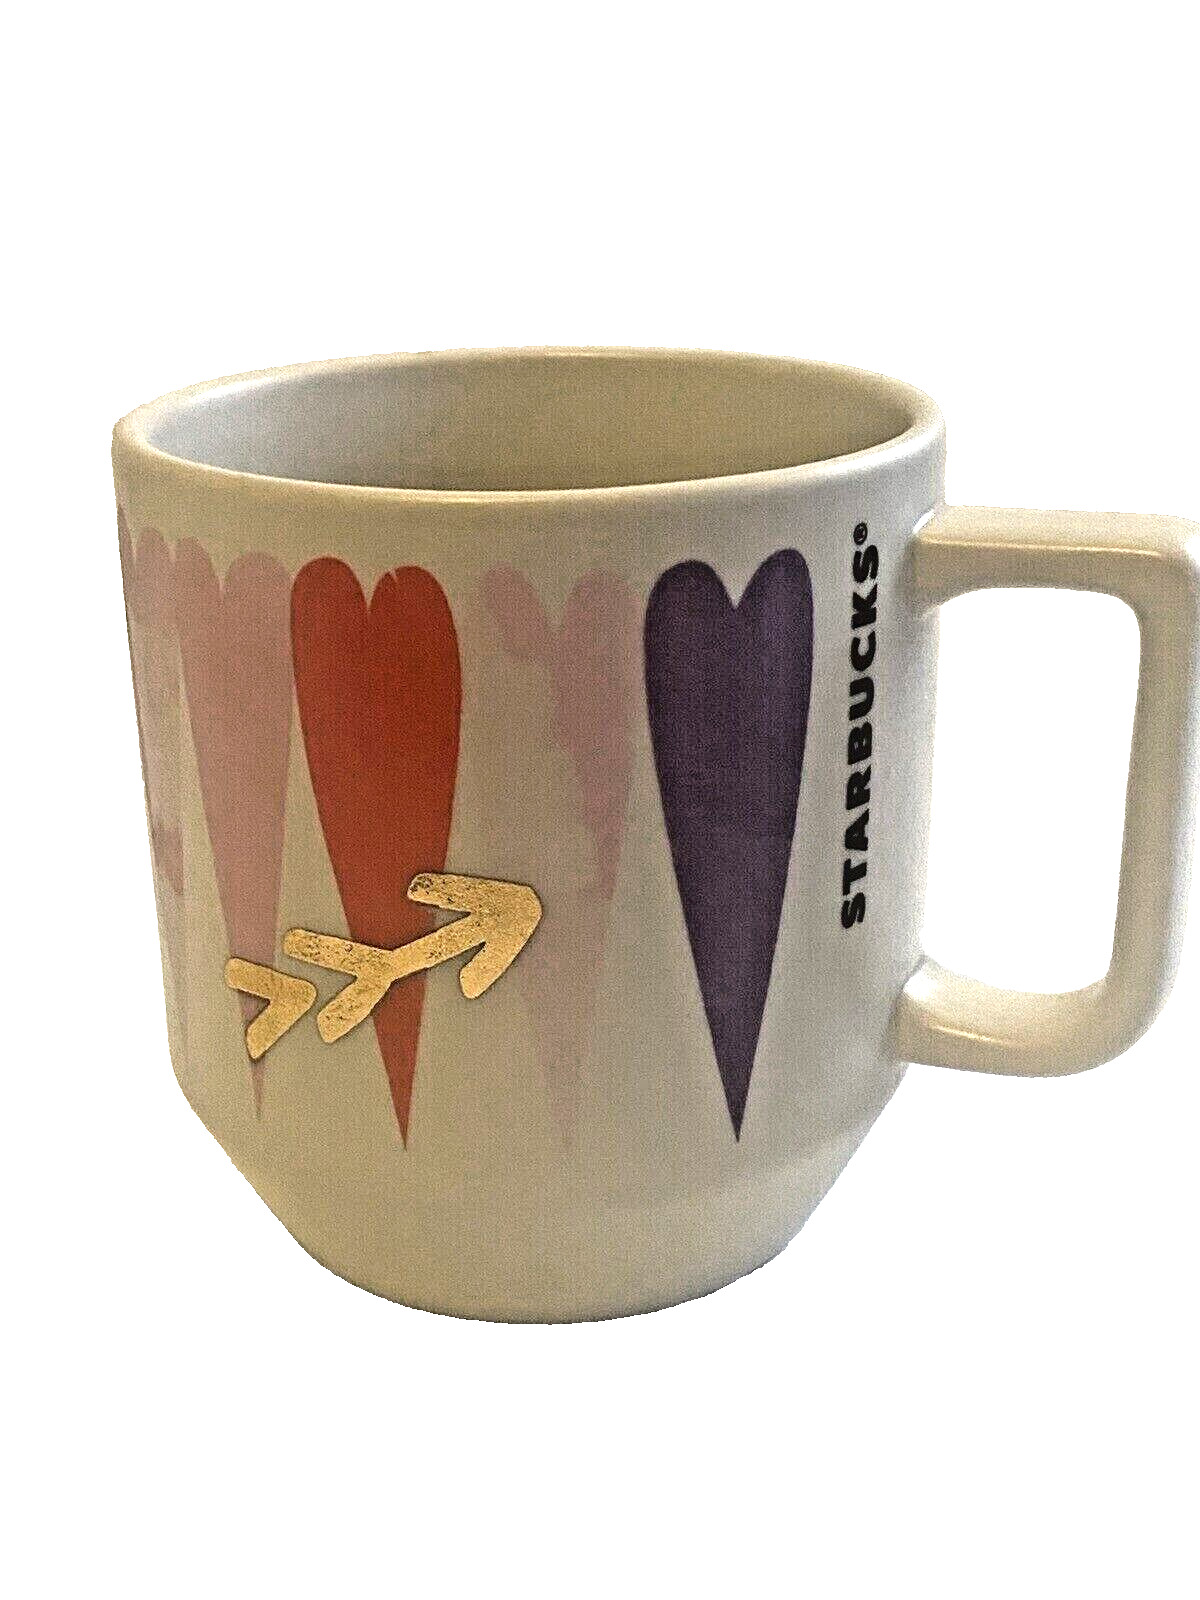 Starbucks Coffee Mug 2016 12oz Cup Valentines Hearts with Arrow